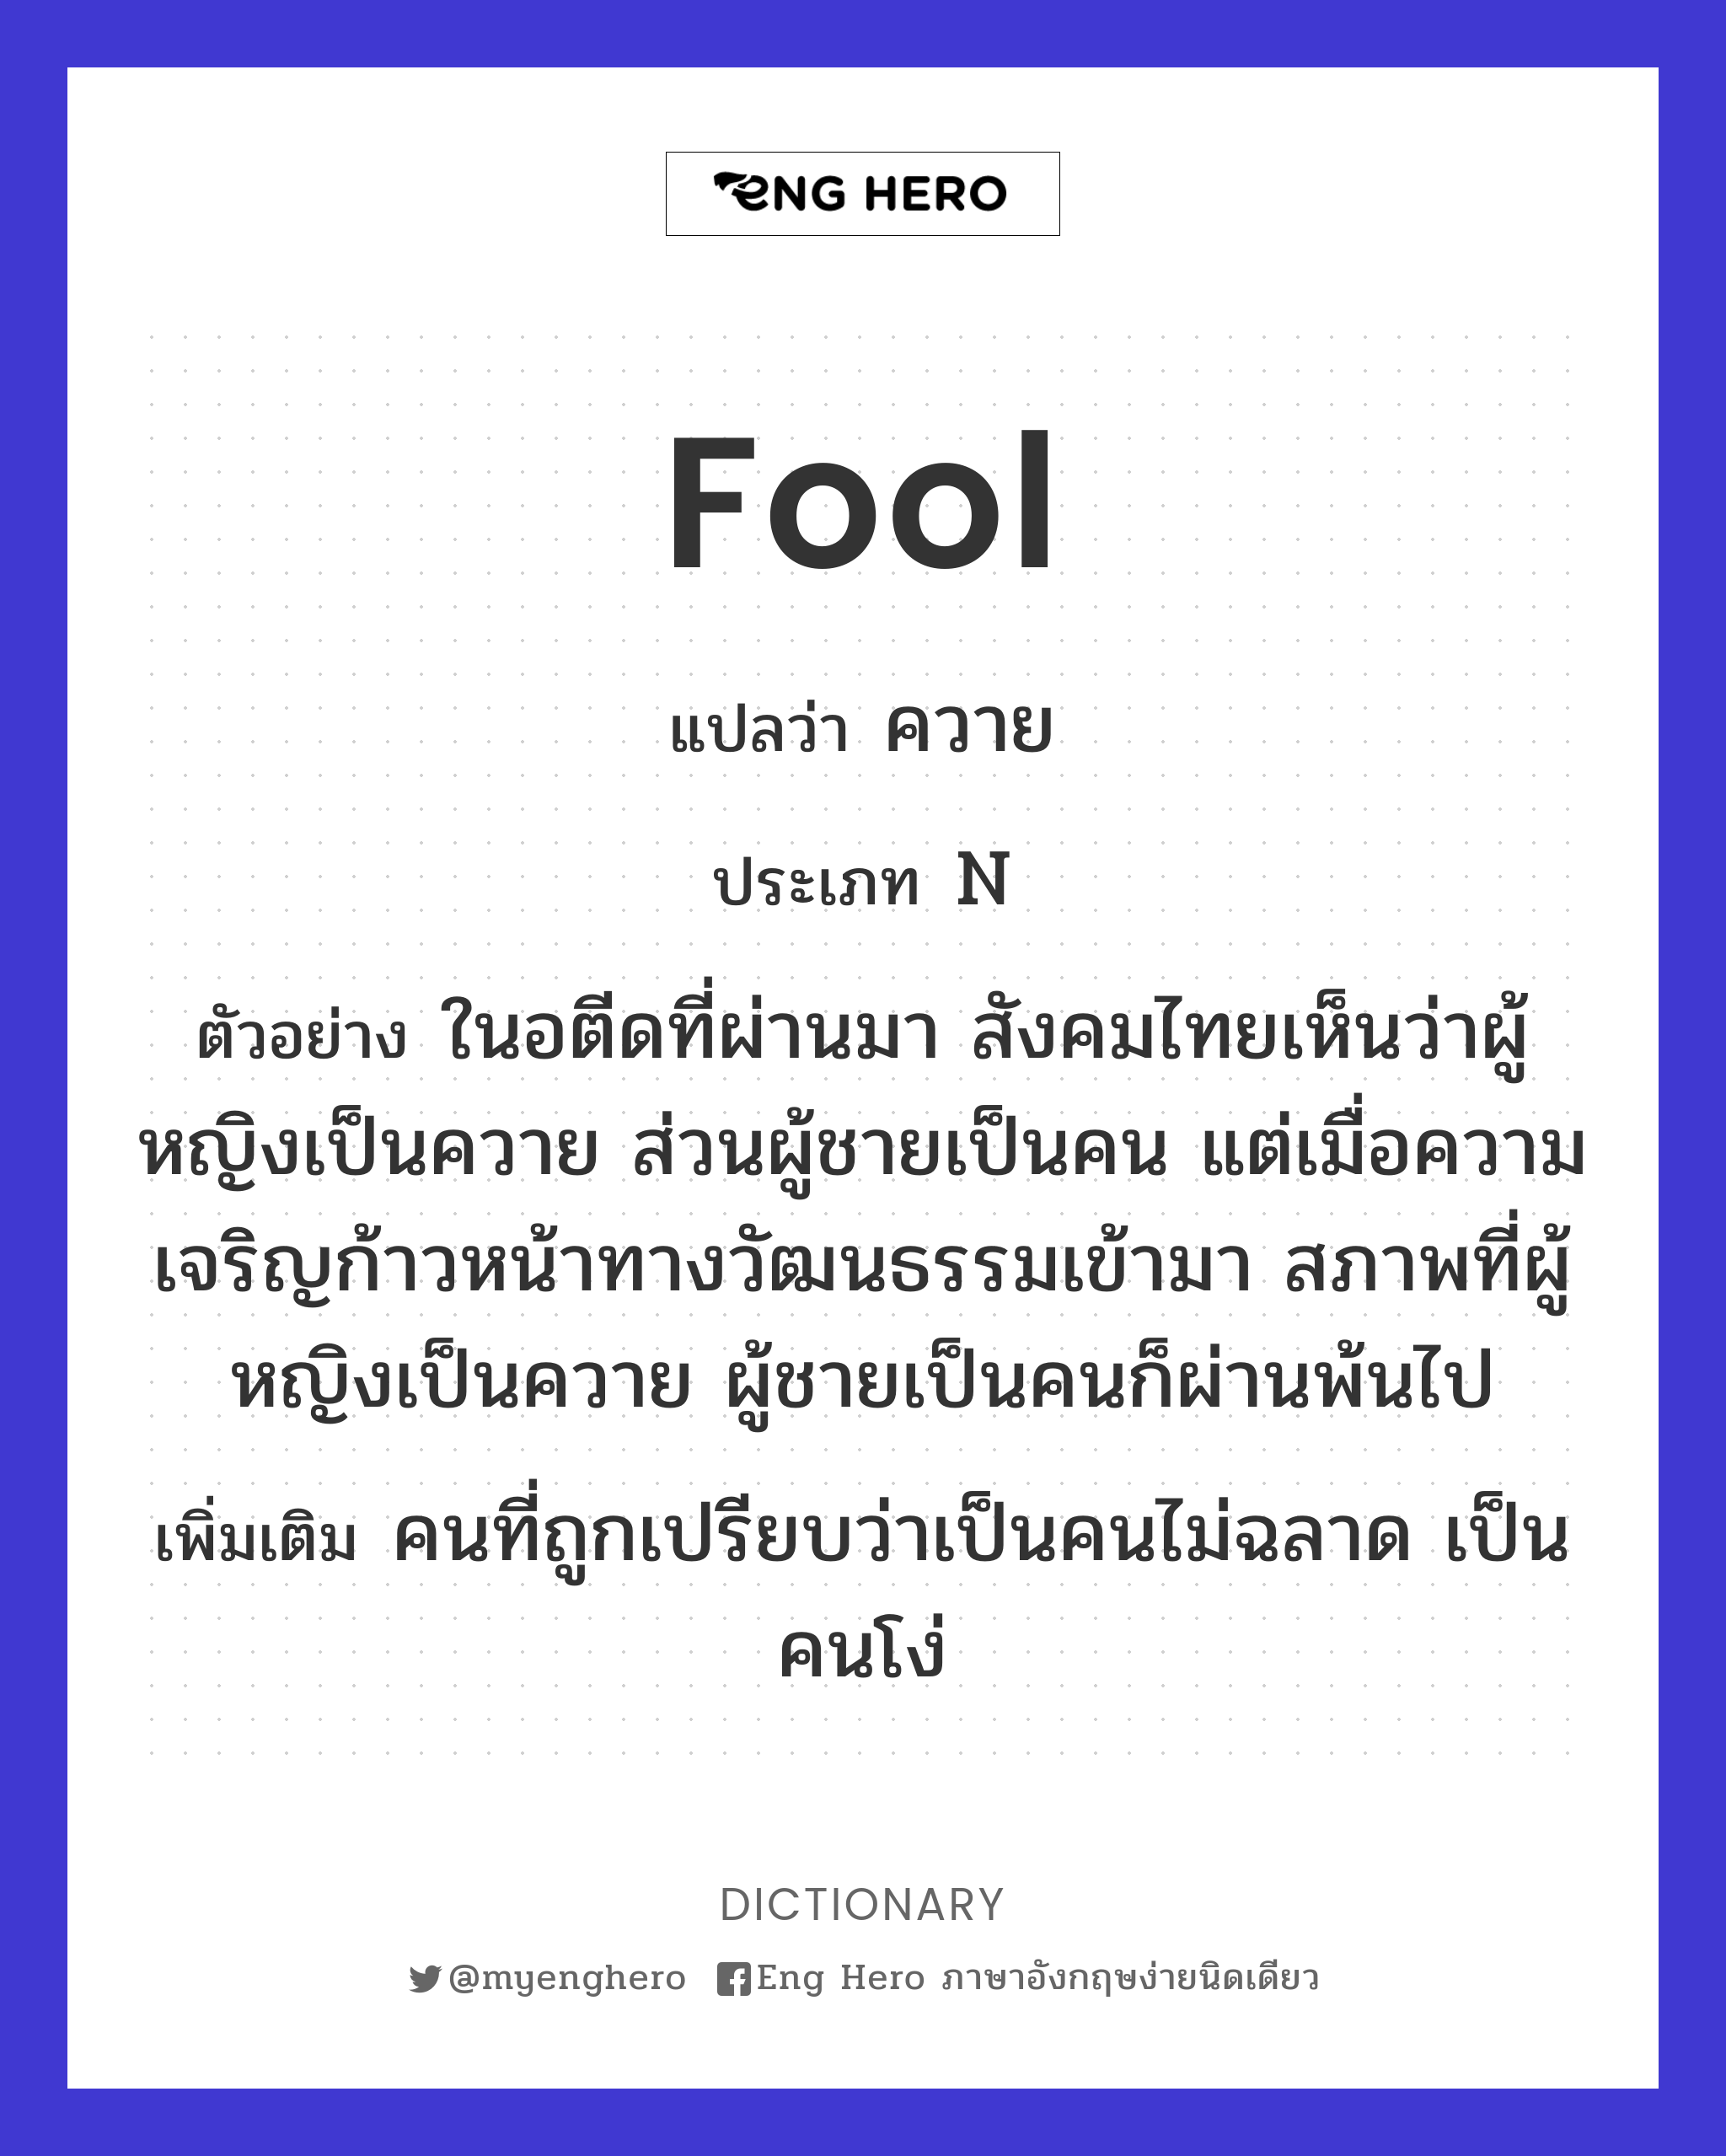 fool